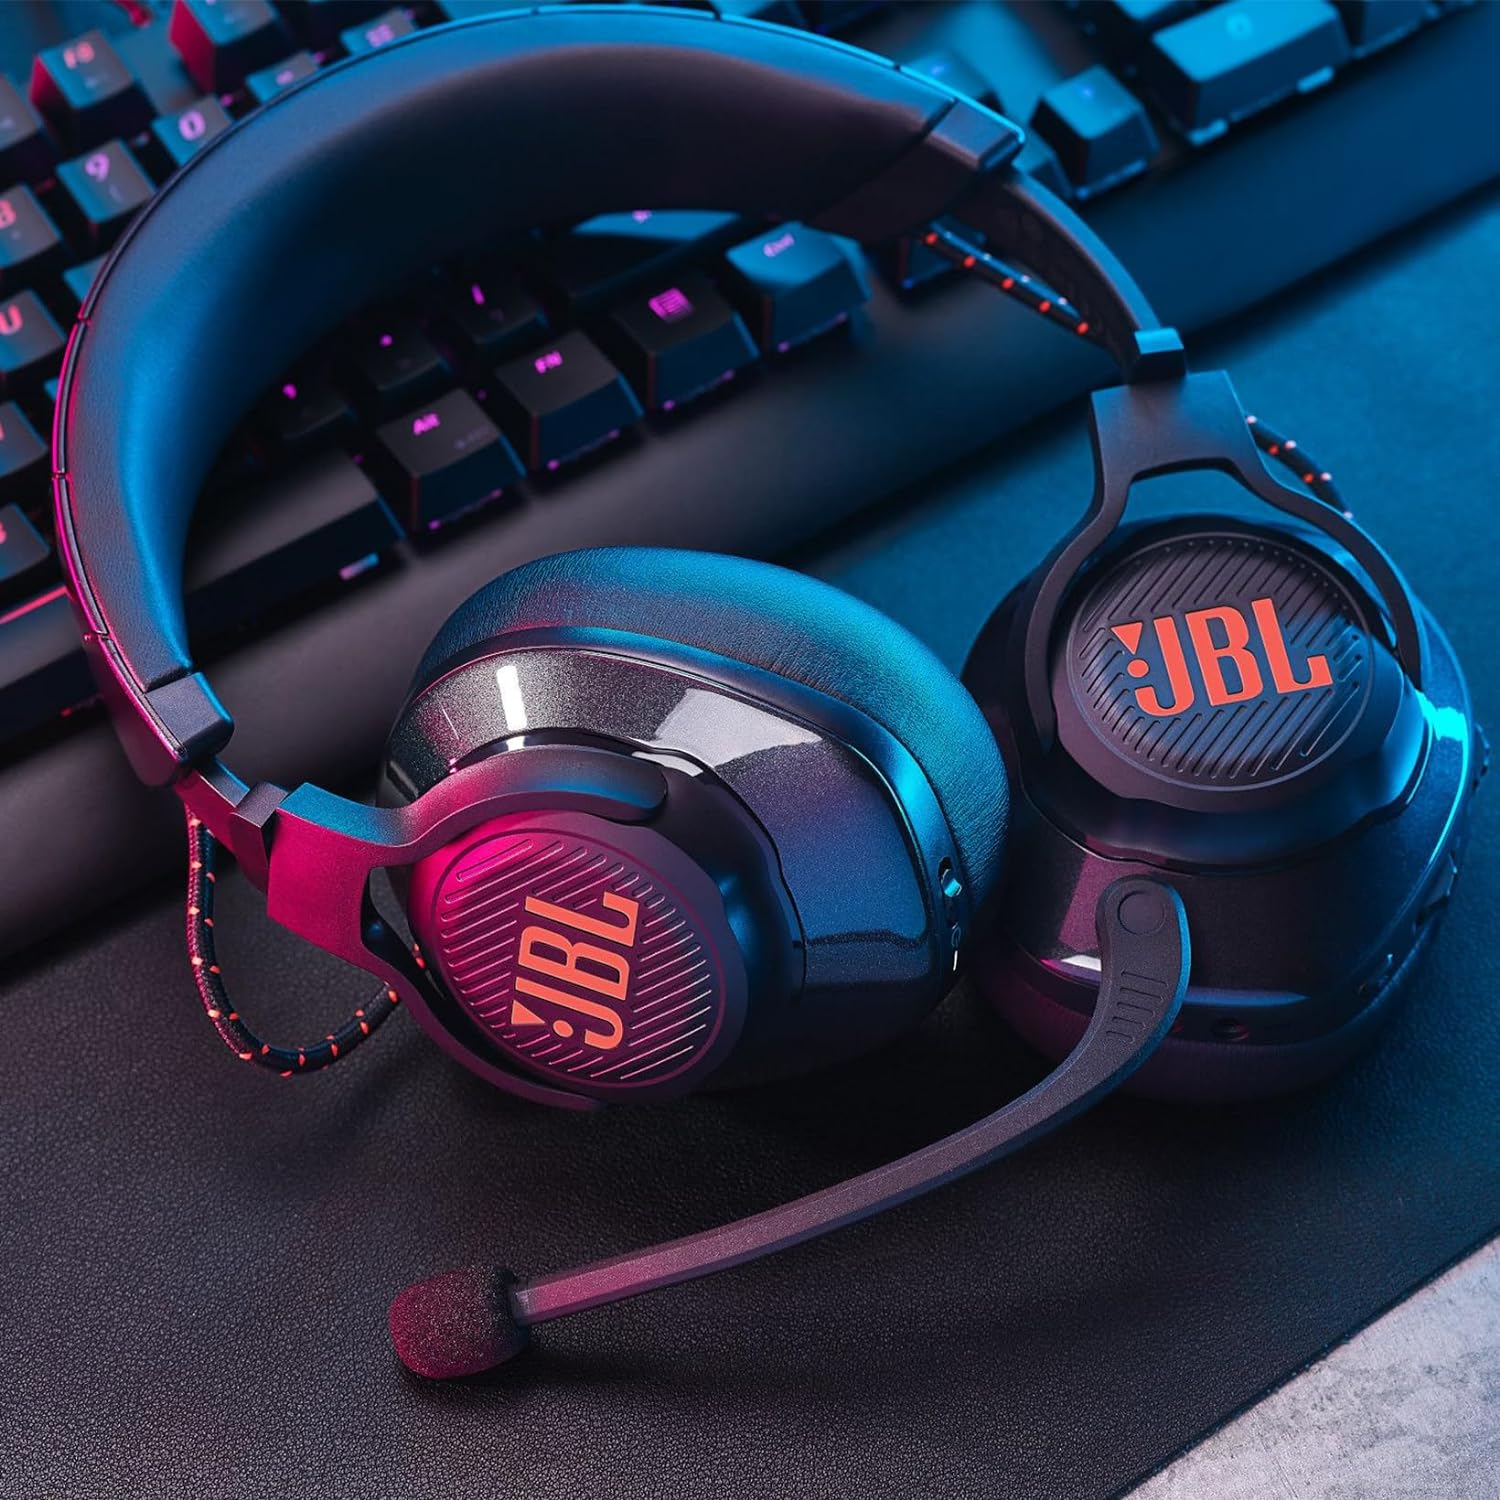 JBL Quantum 350 draadloze on-ear gaming headset, met afneembare microfoon, surround sound, 2-4GHz-connectiviteit, voor pc, Mac, Xbox, Playstation, Nintendo Switch, mobiel en VR